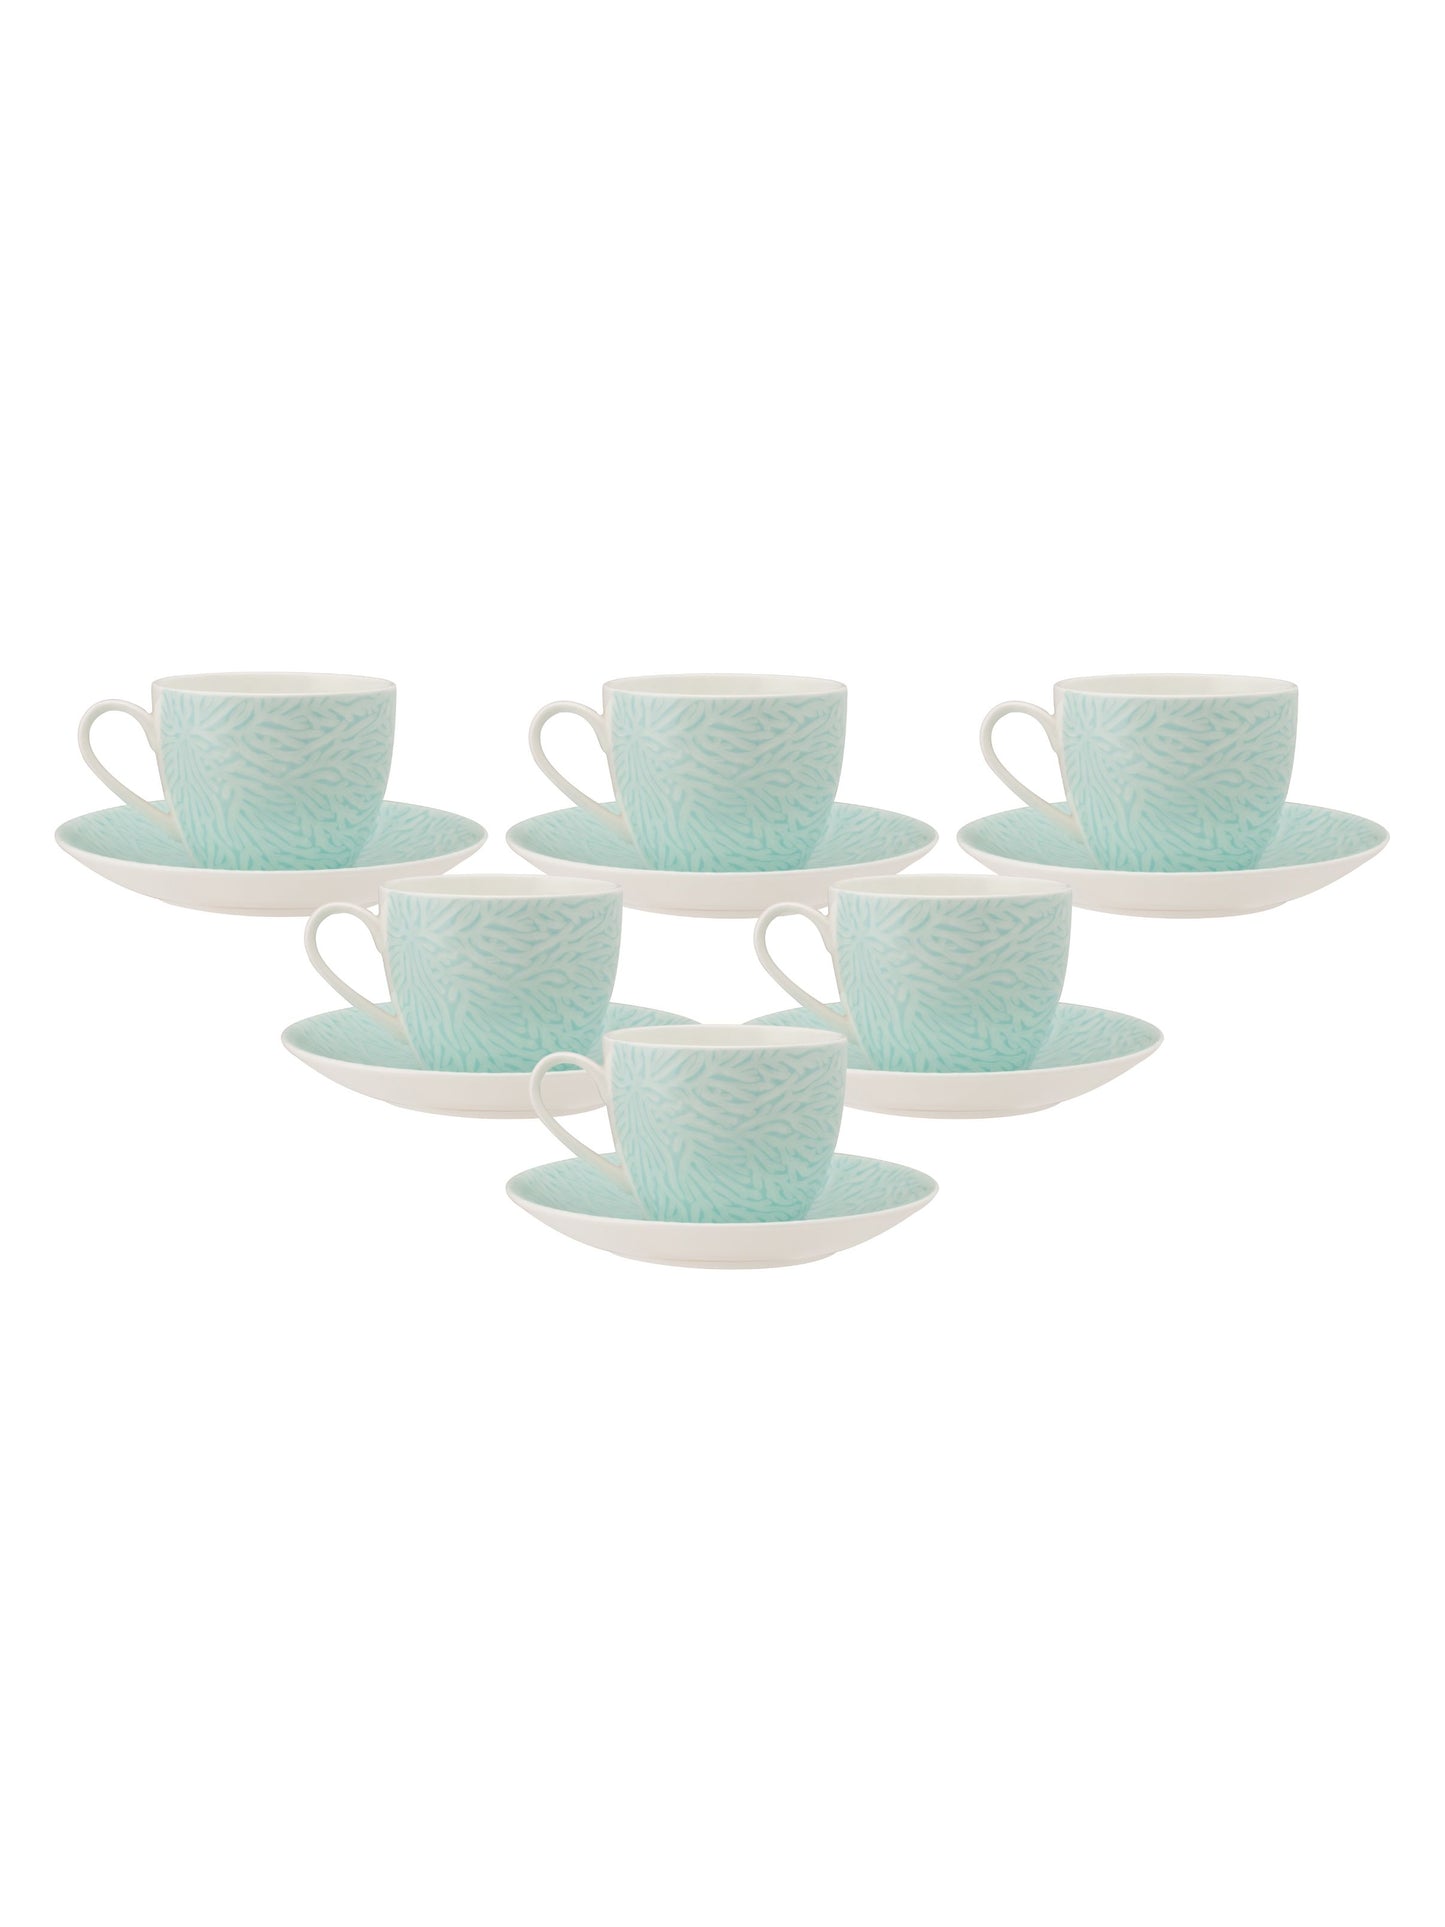 JCPL Cream Vanilla Cup & Saucer, 170ml, Set of 12 (6 Cups + 6 Saucers) (V410)